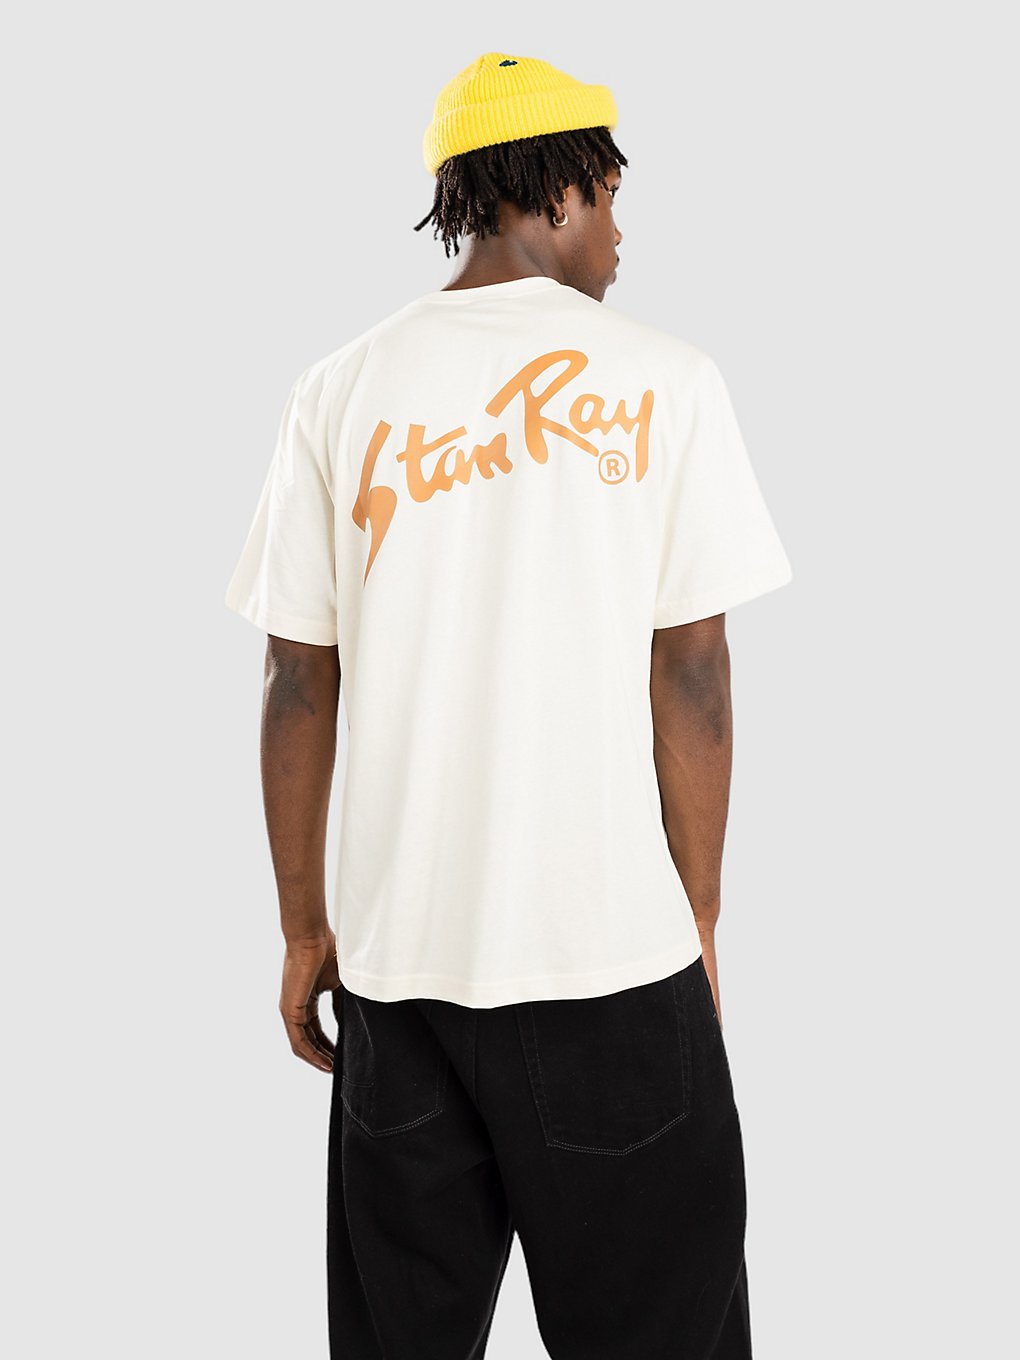 Stan Ray Stan Og T-Shirt white kaufen